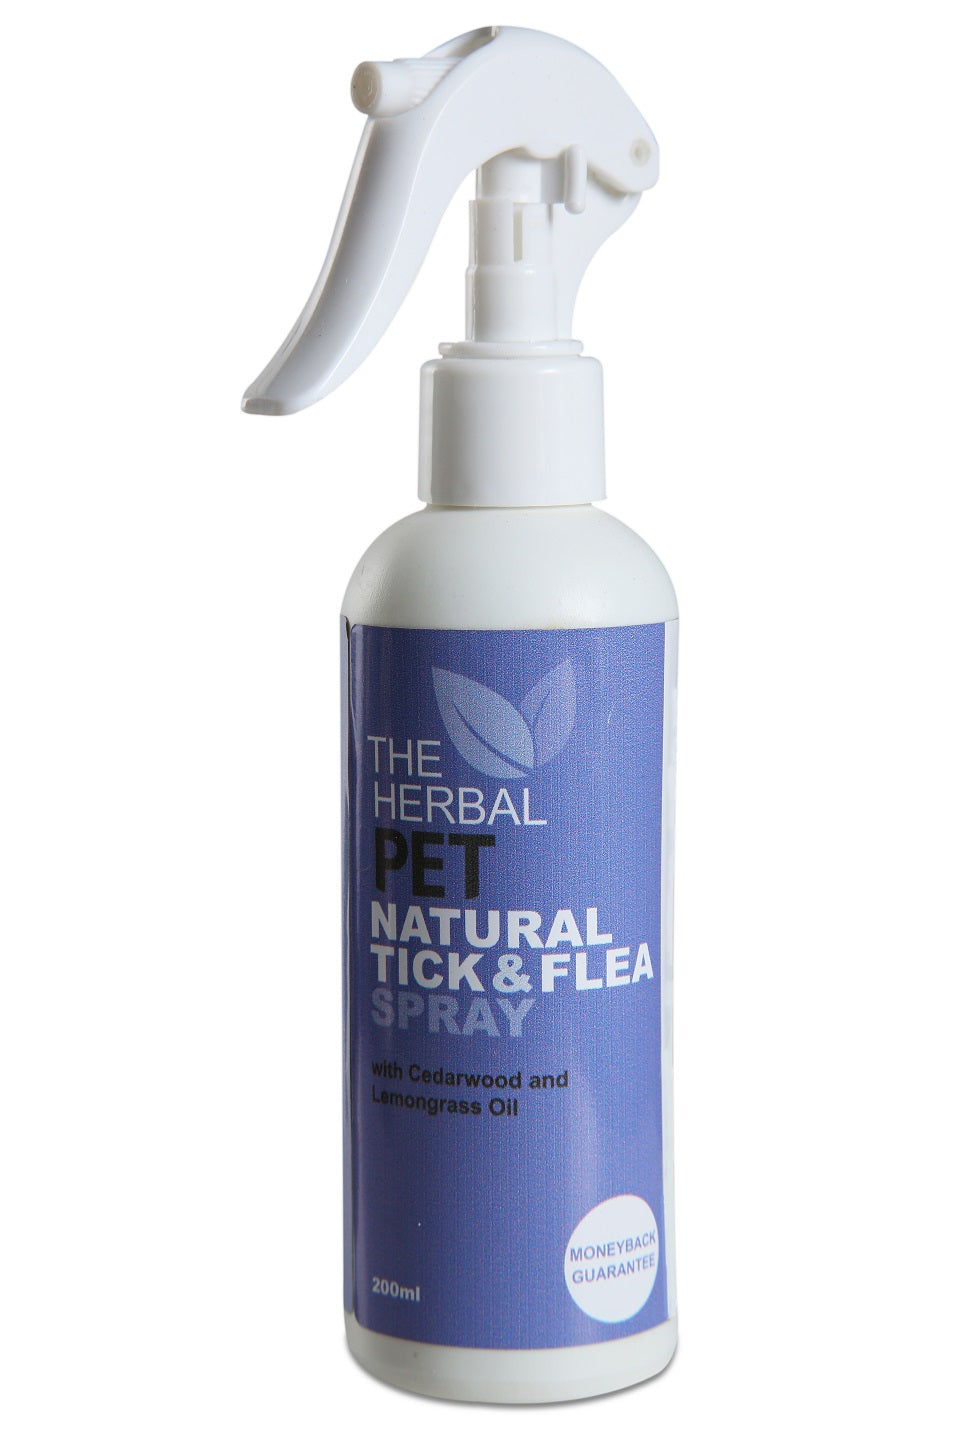 The Herbal Pet Tick & Flea Spray 200ml